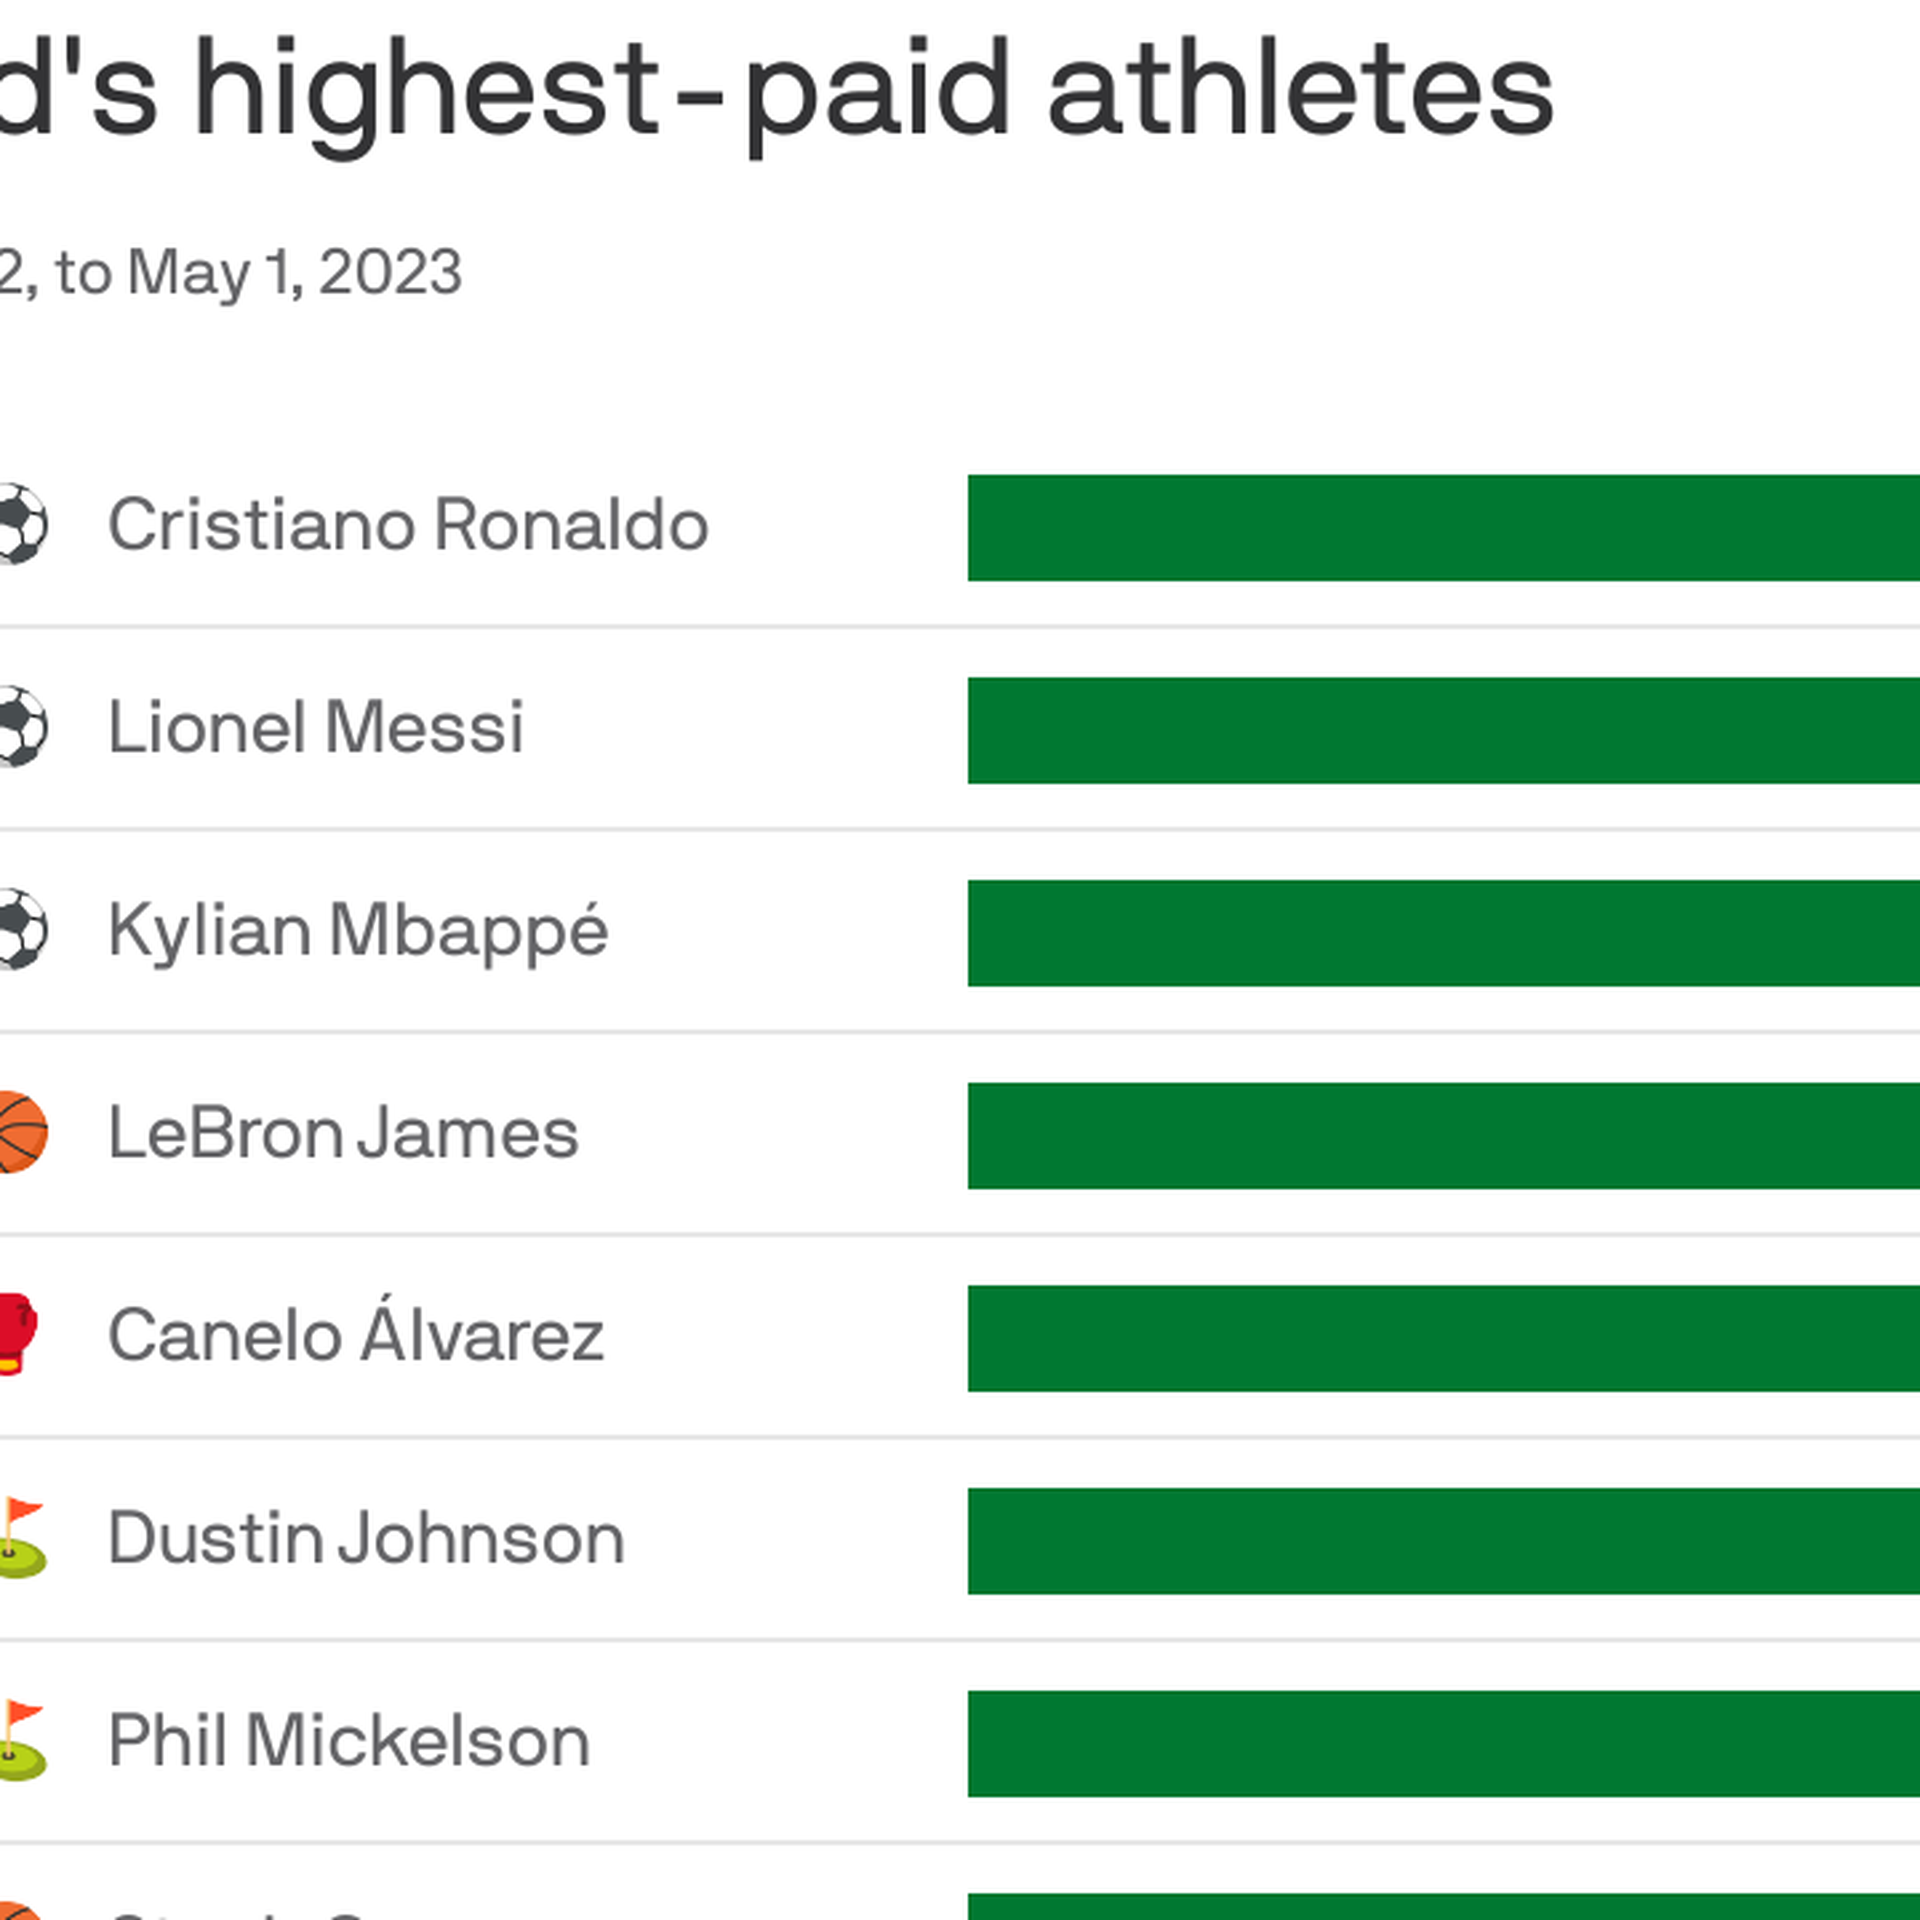 The World's Highest-Paid Athletes 2023